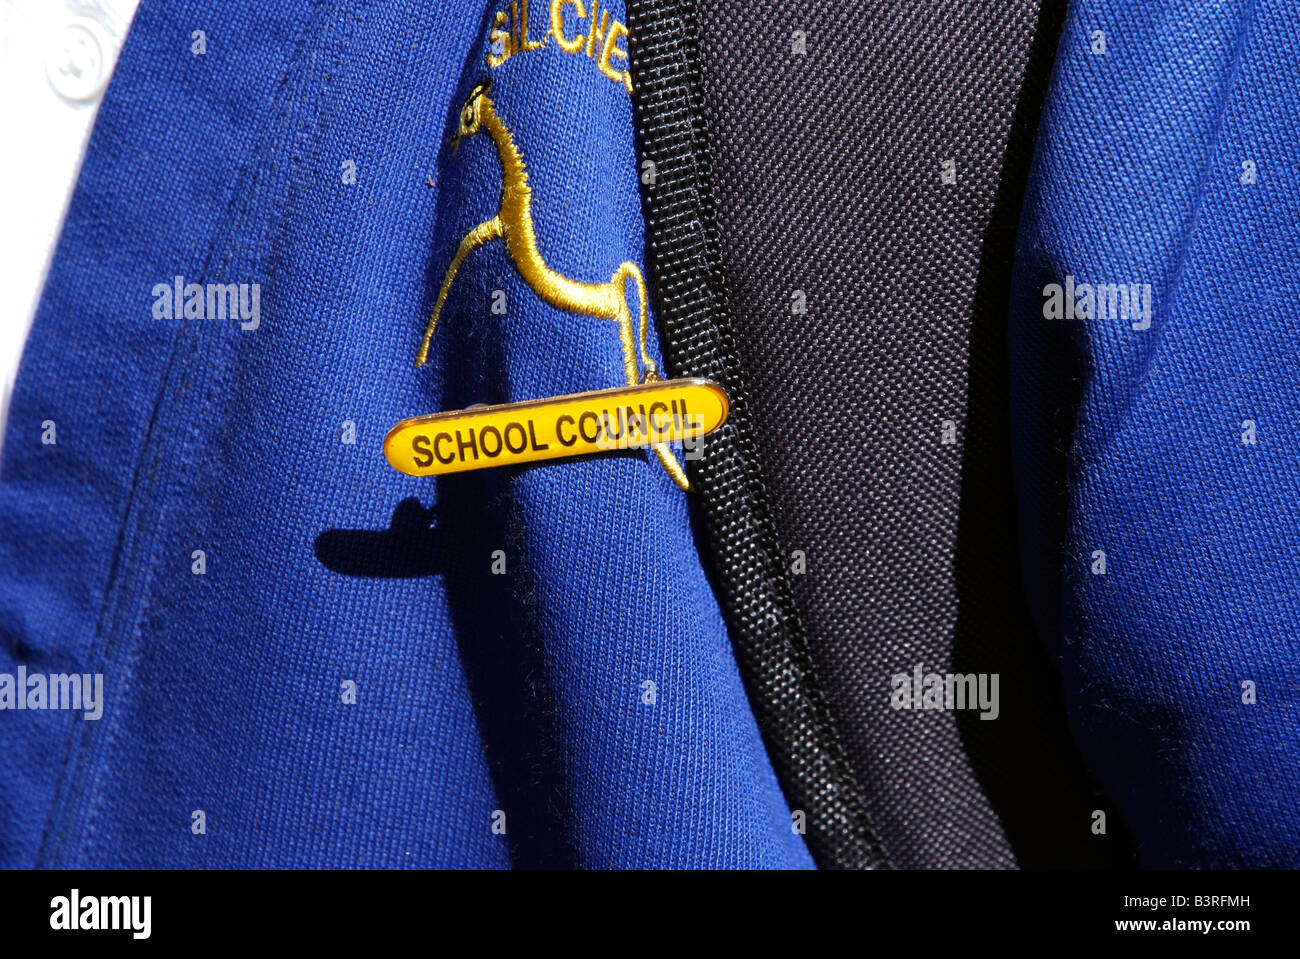 School Council member badge on childs uniform Stock Photo